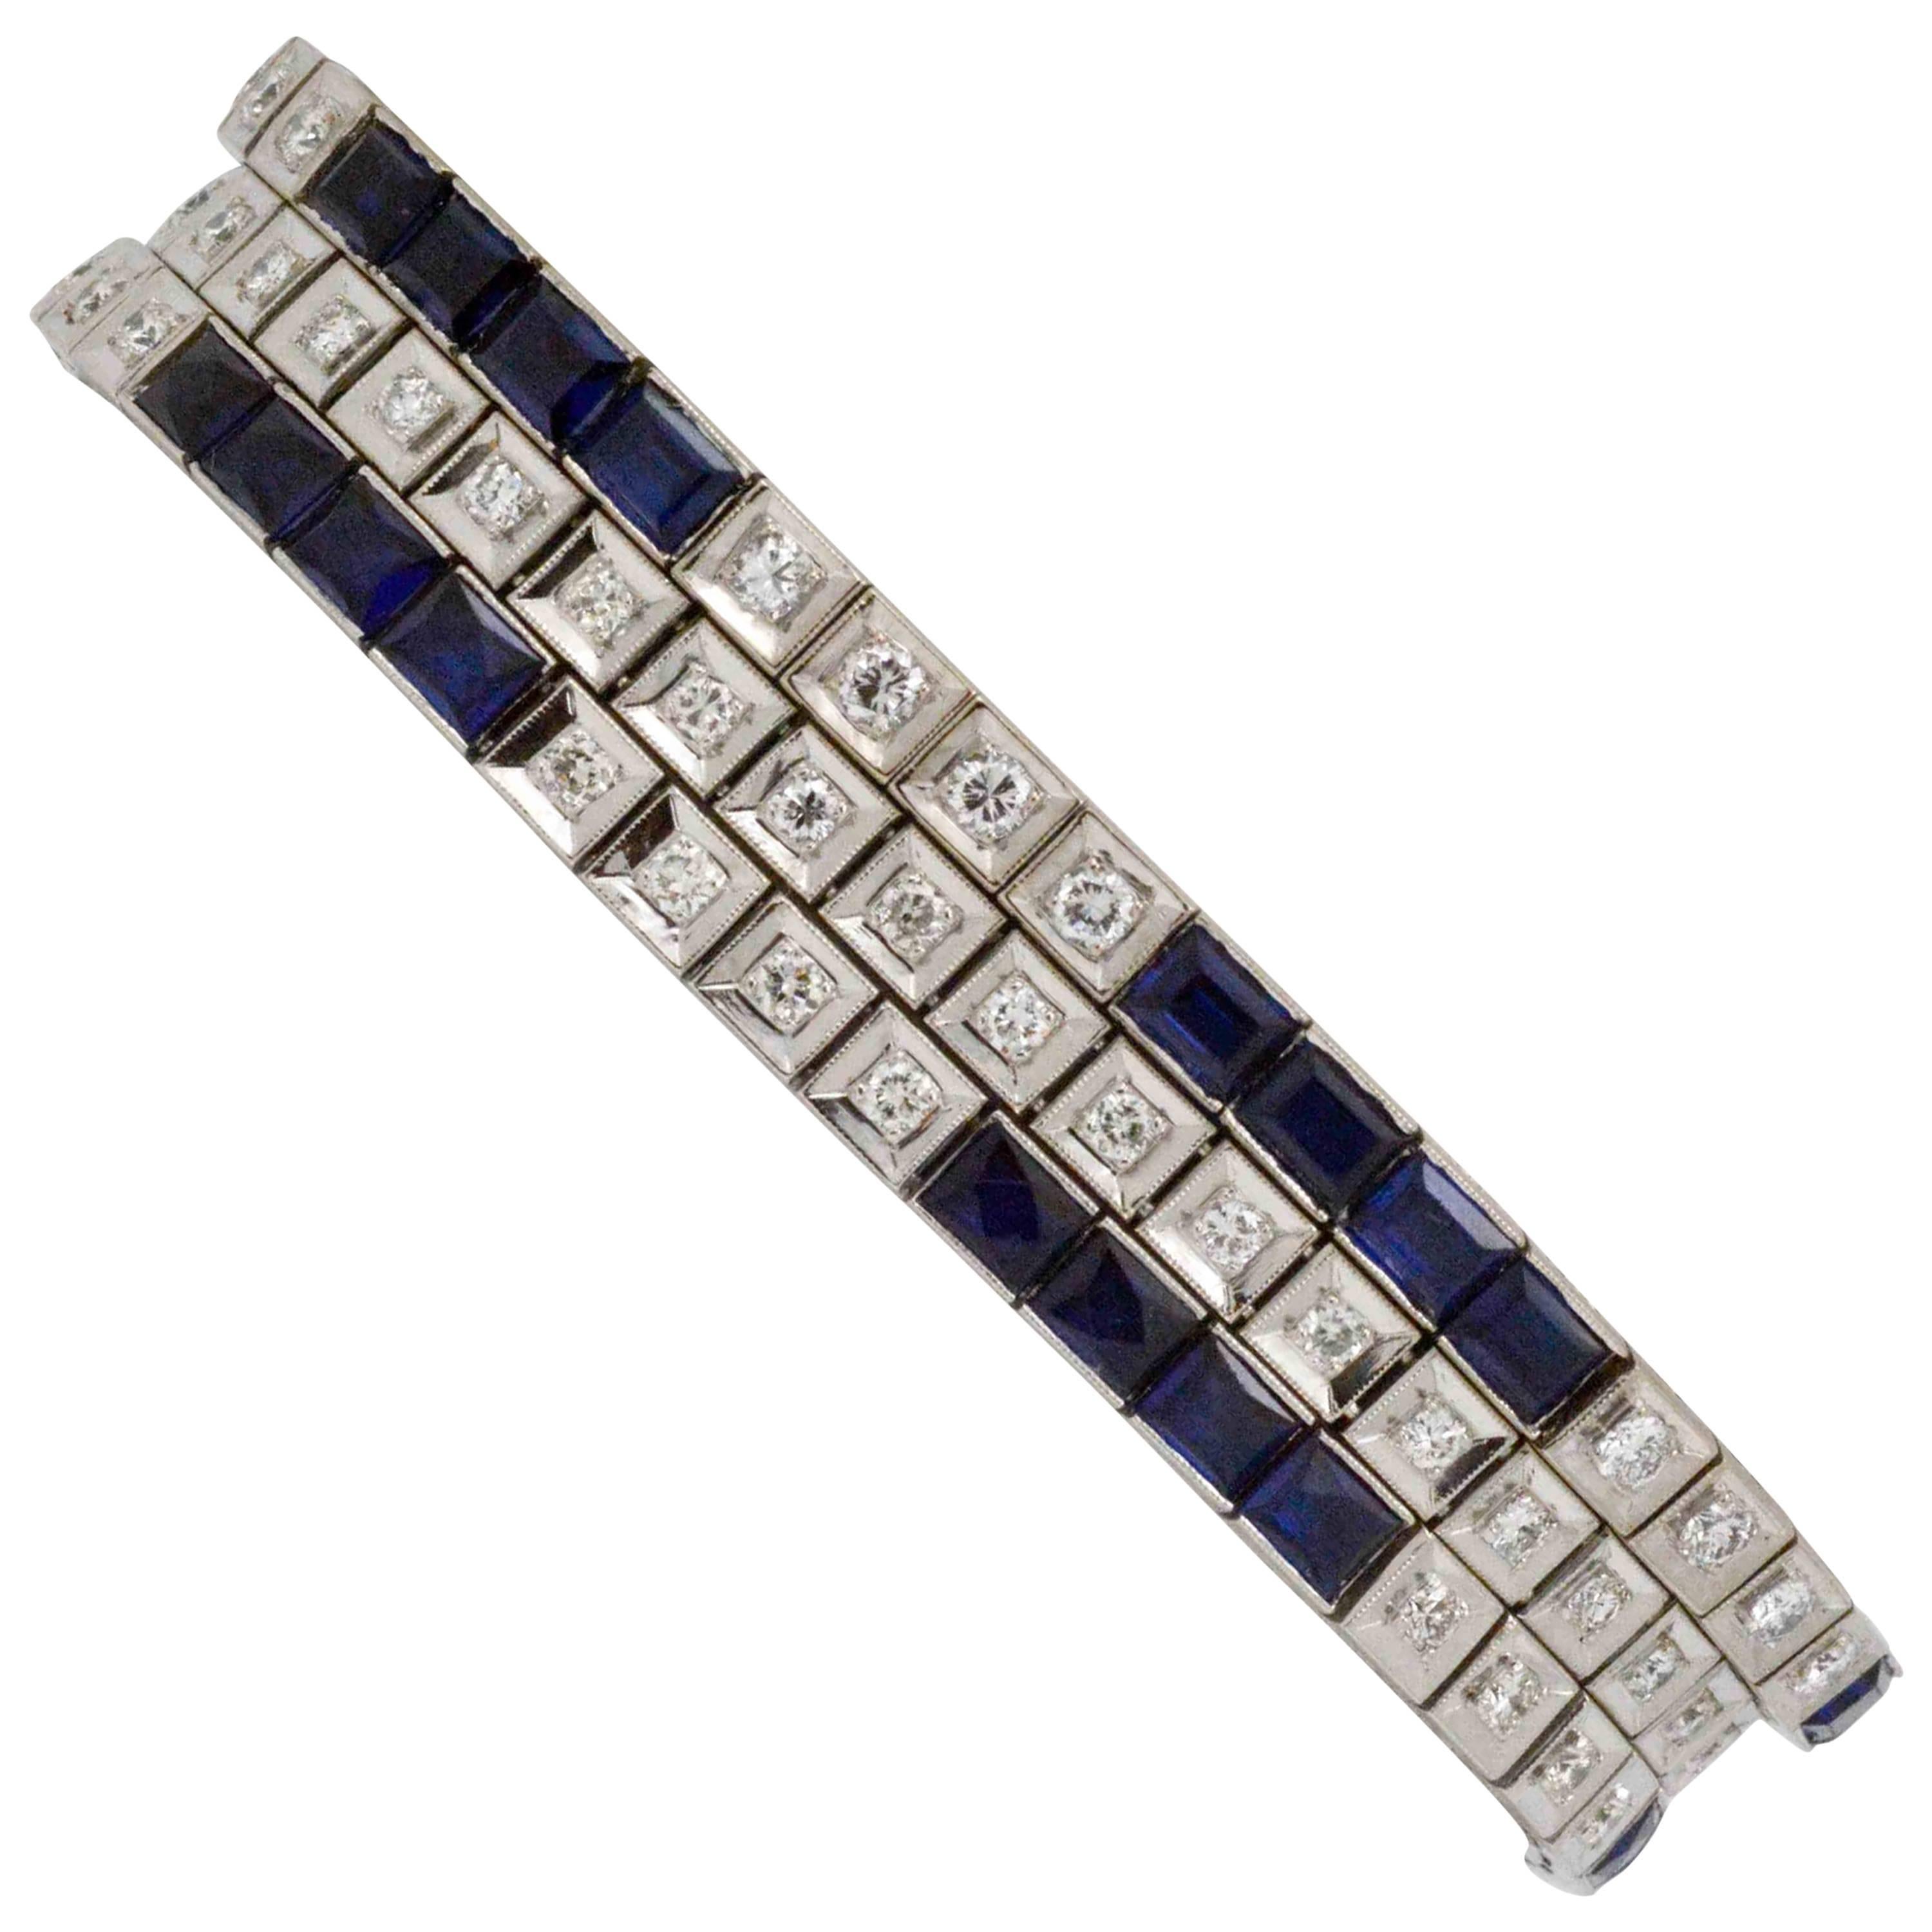 Three Platinum Bracelets; 2.89 Carat Diamonds 9.9 Carat Synthetic Sapphires